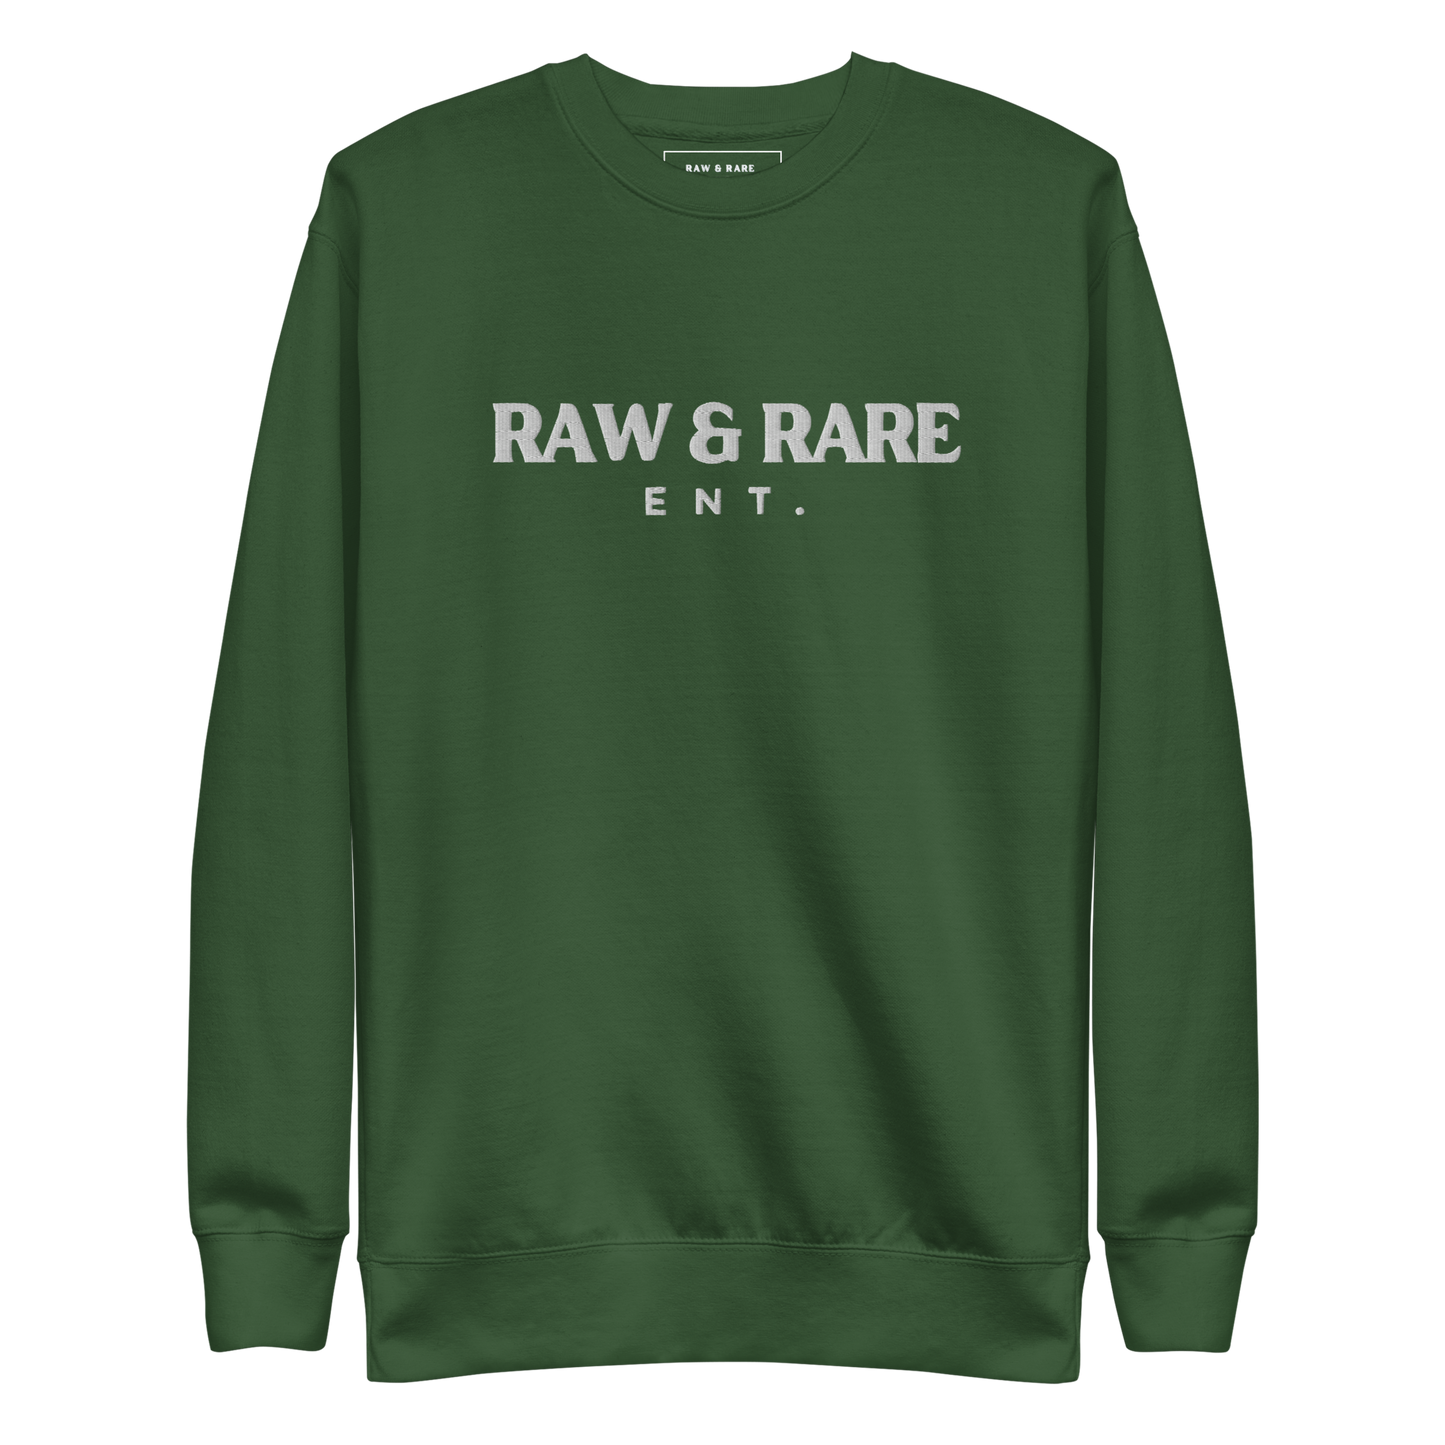 Raw & Rare Ent. Sweatshirt